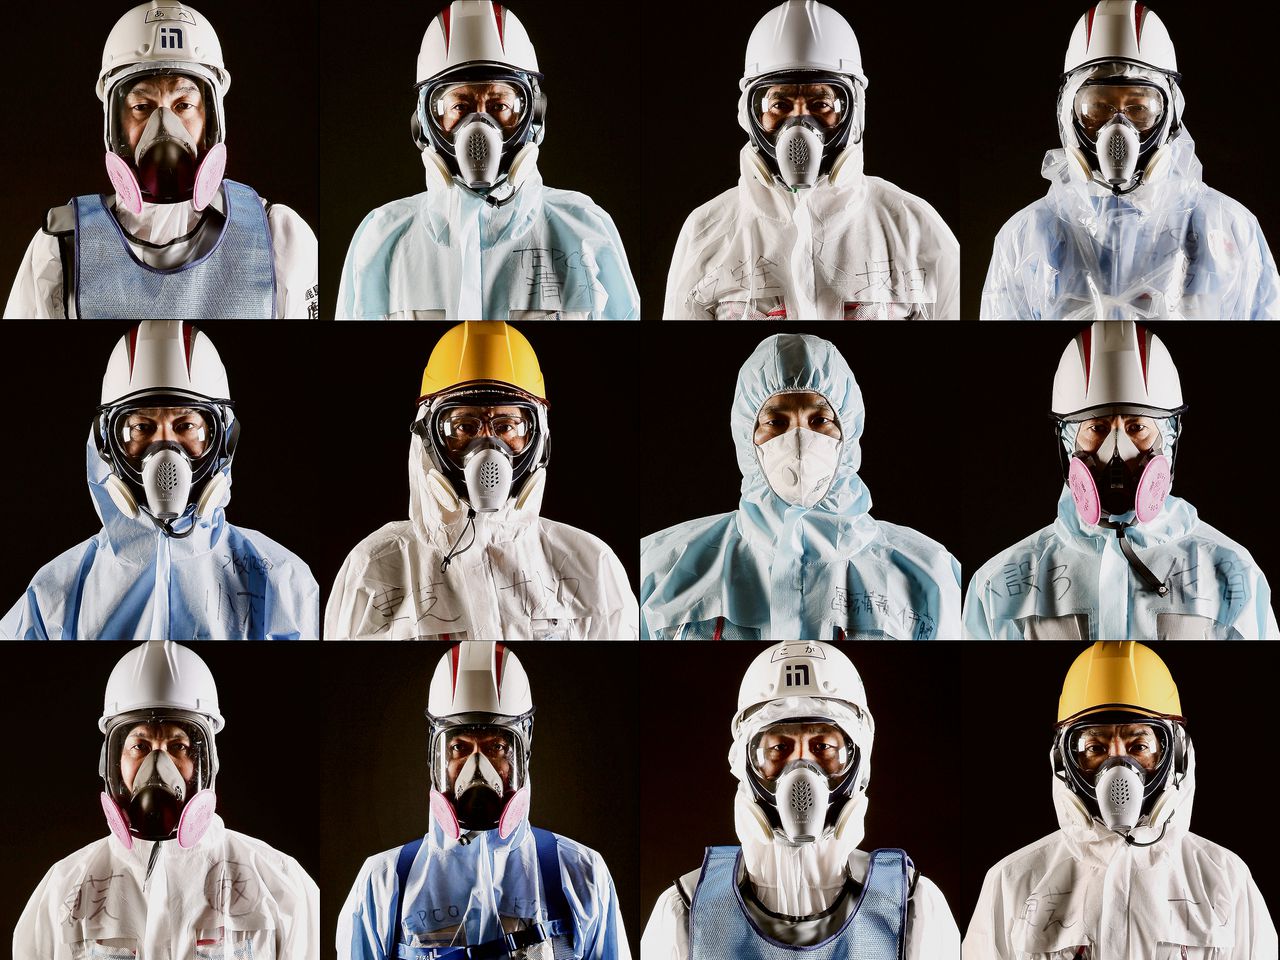 Werknemers van kerncentrale-exploitant Tepco, vijf jaar na de kernramp in Fukushima.